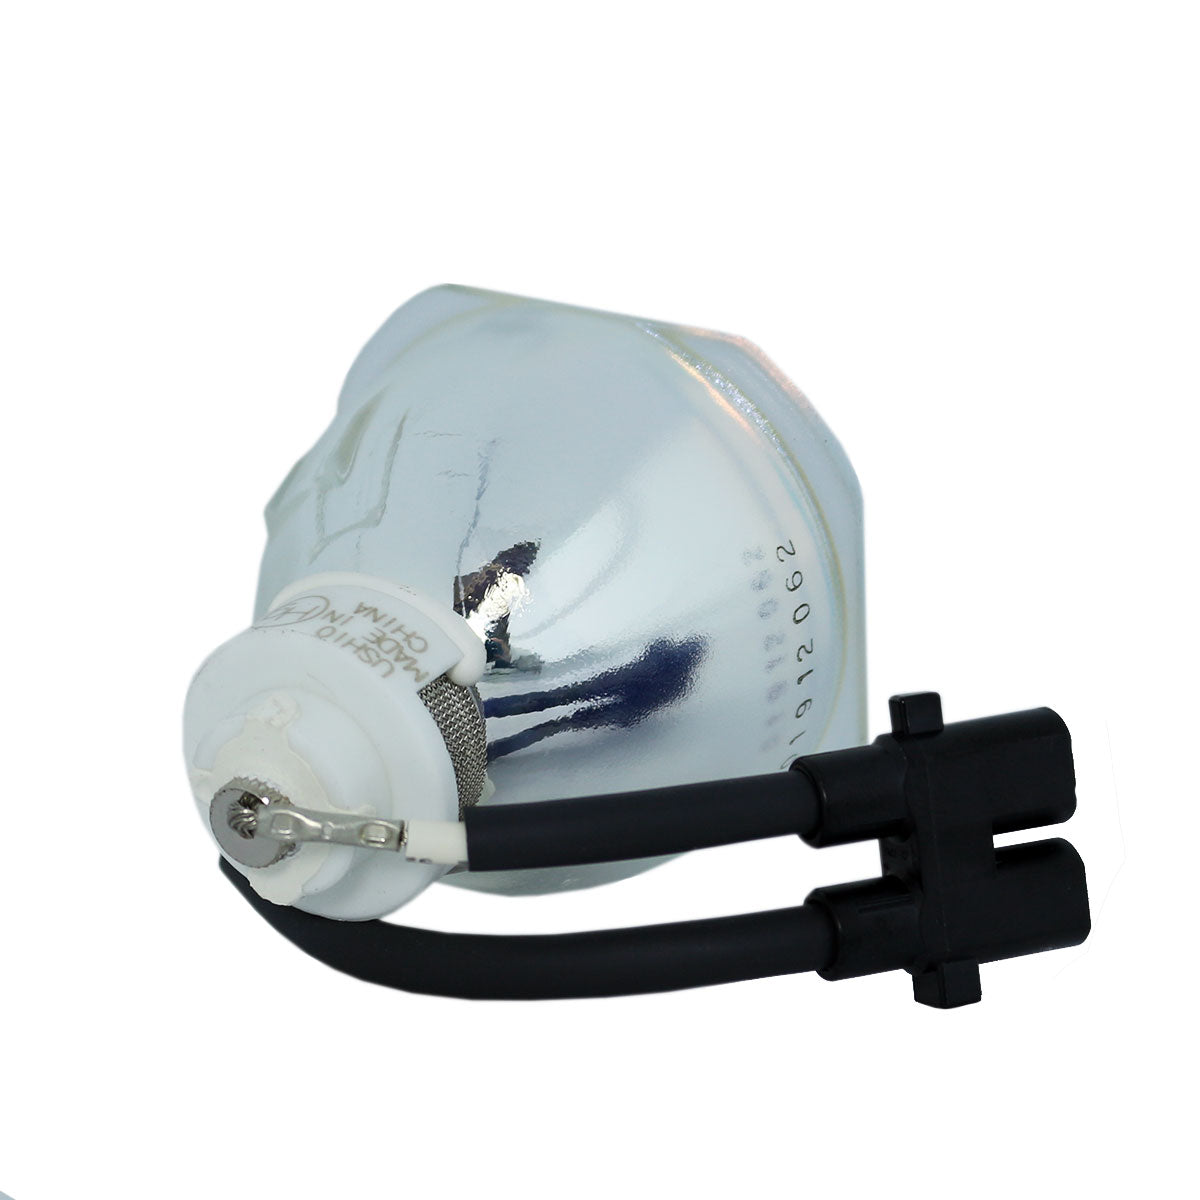 PLUS 28-030 Ushio Projector Bare Lamp